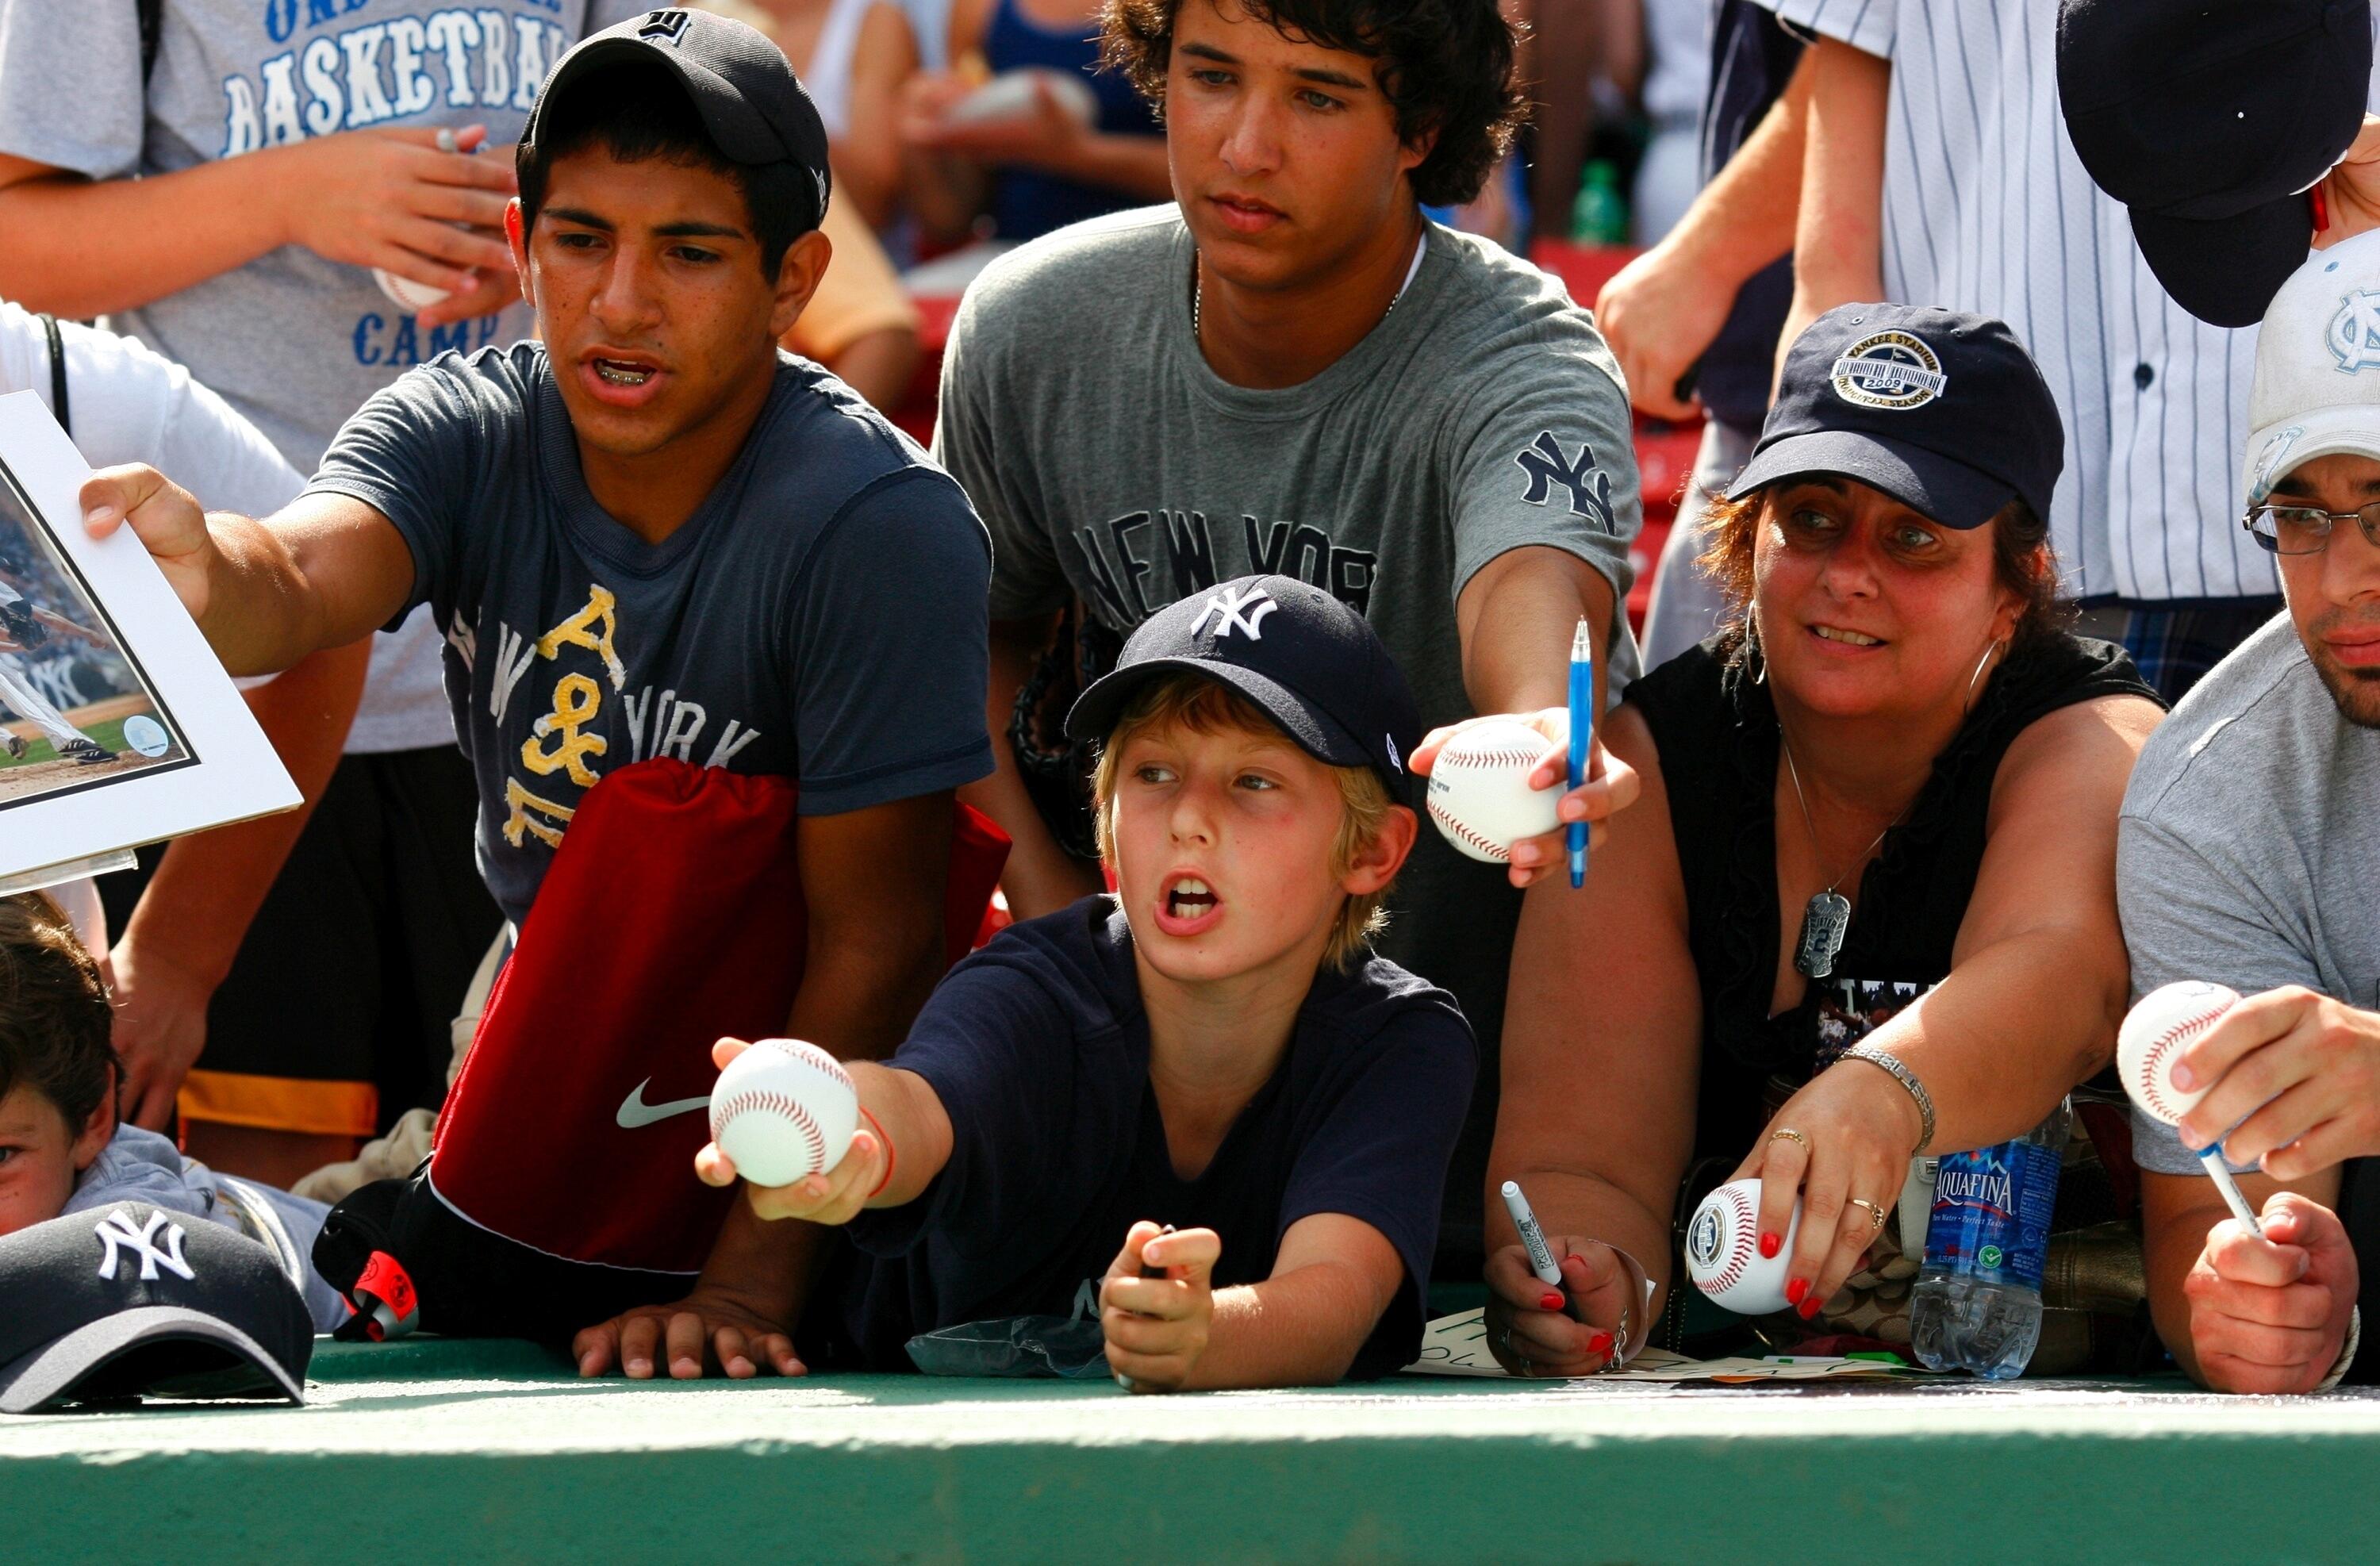 Yankees fan steals Aaron Judge ball out of little kid's glove